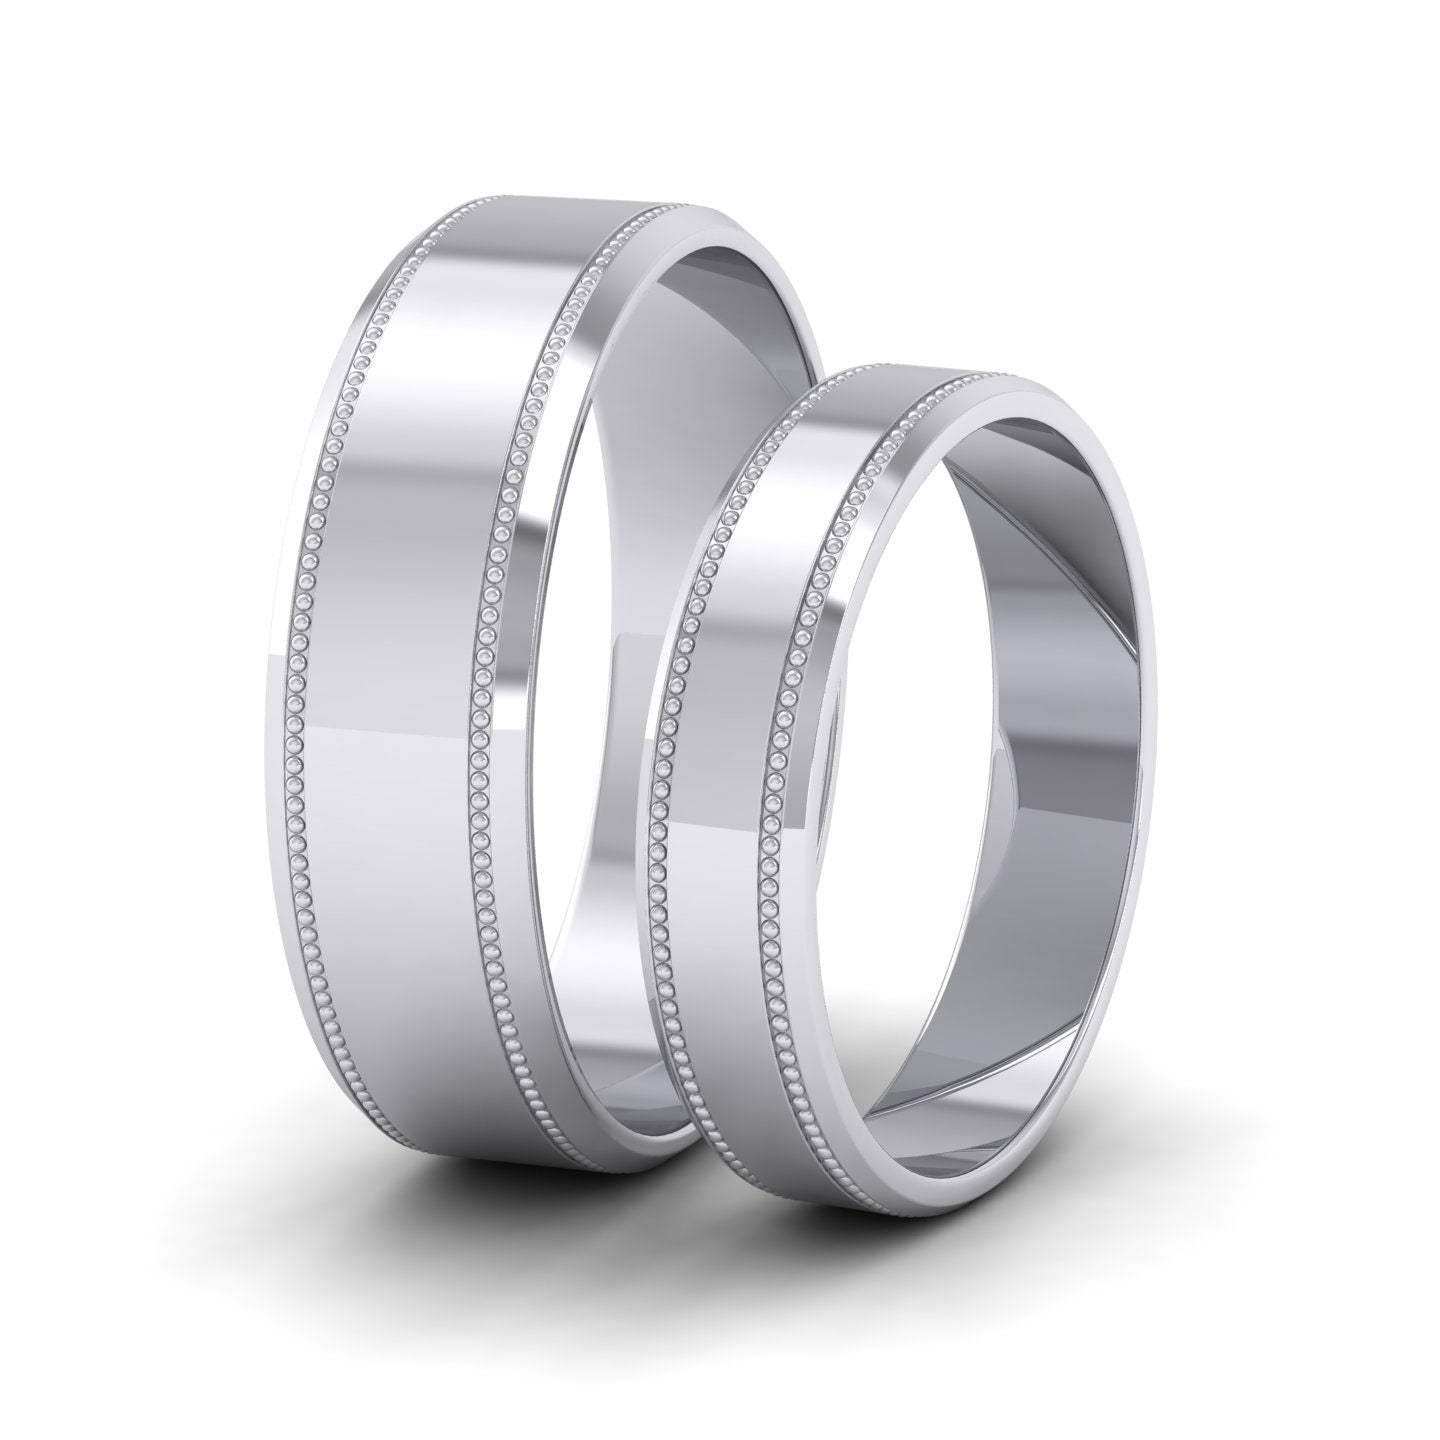 Bevelled Edge And Millgrain Pattern 950 Palladium 4mm Flat Wedding Ring